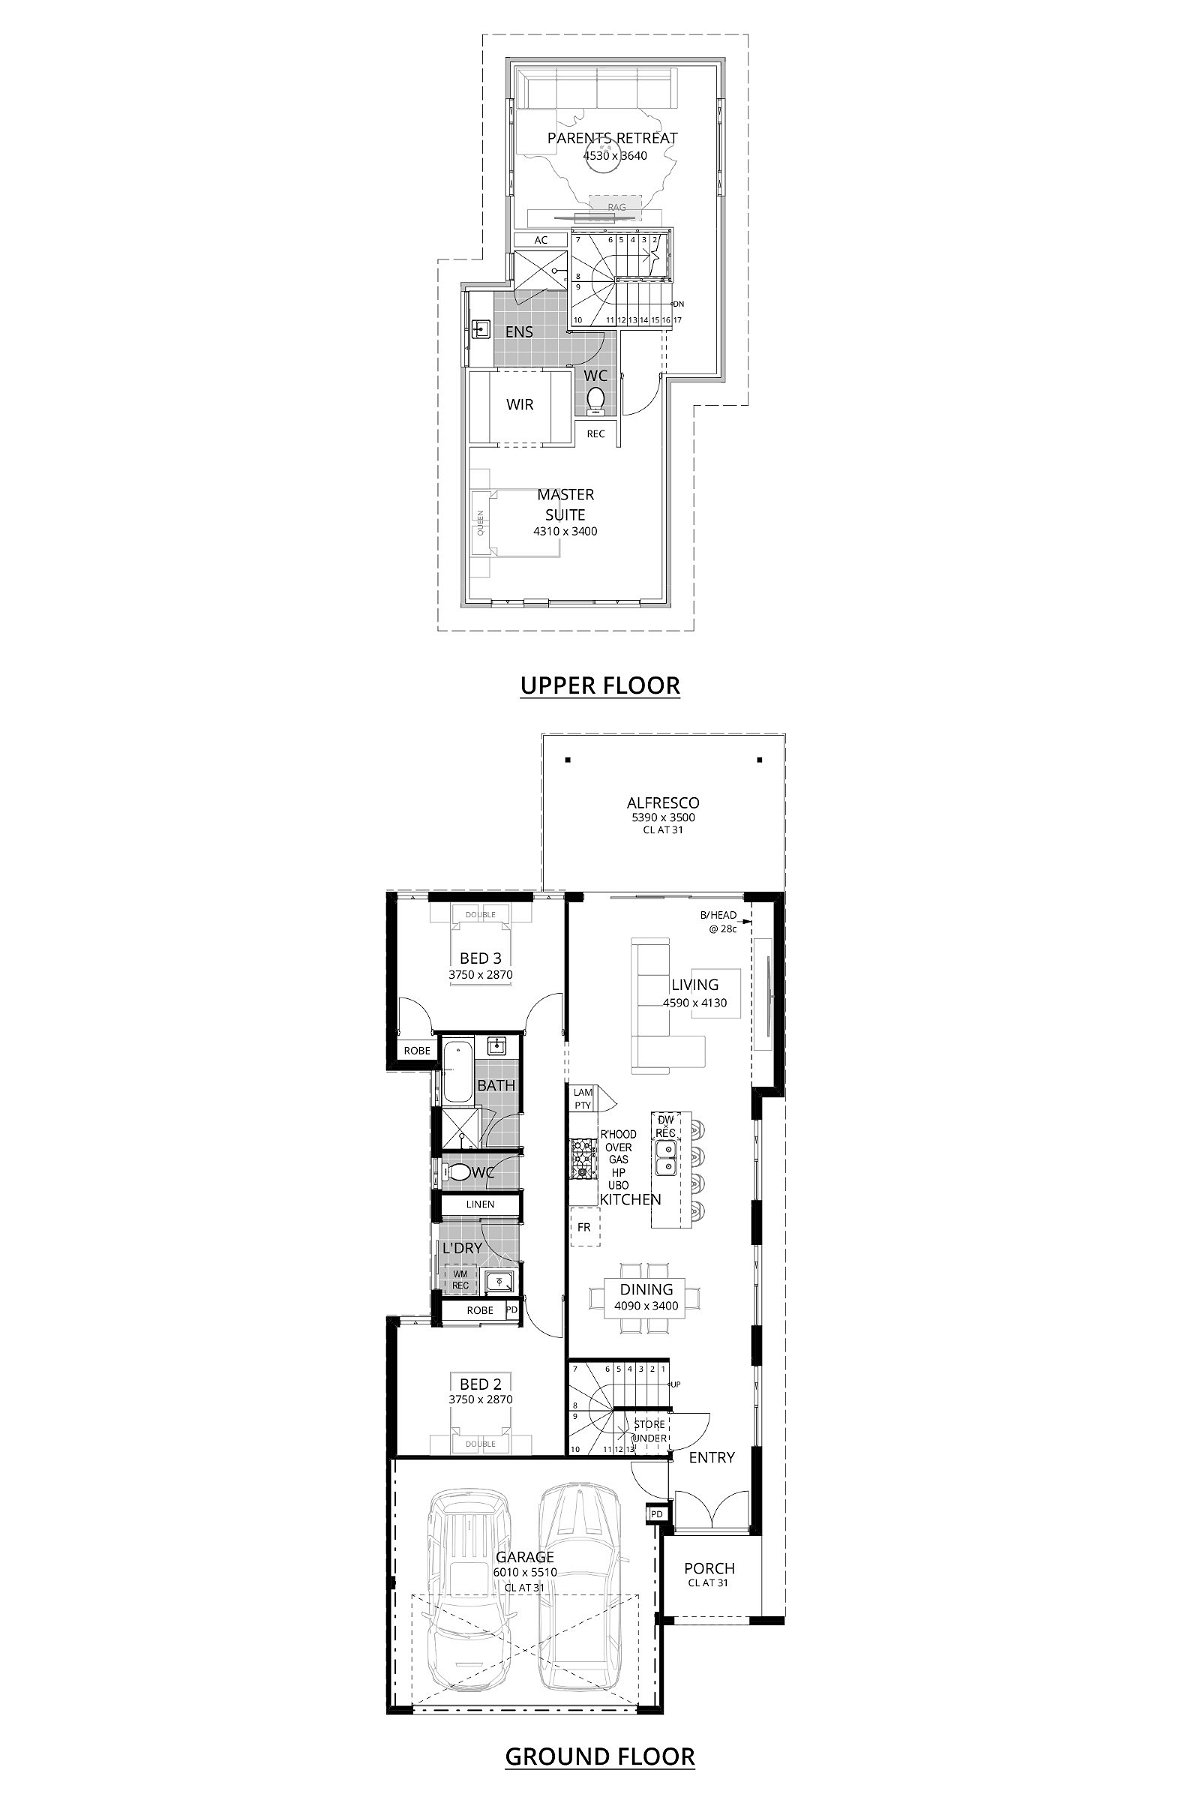 Residential Attitudes - Marvel Manor - Floorplan - Marvel Manor Floorplan Website